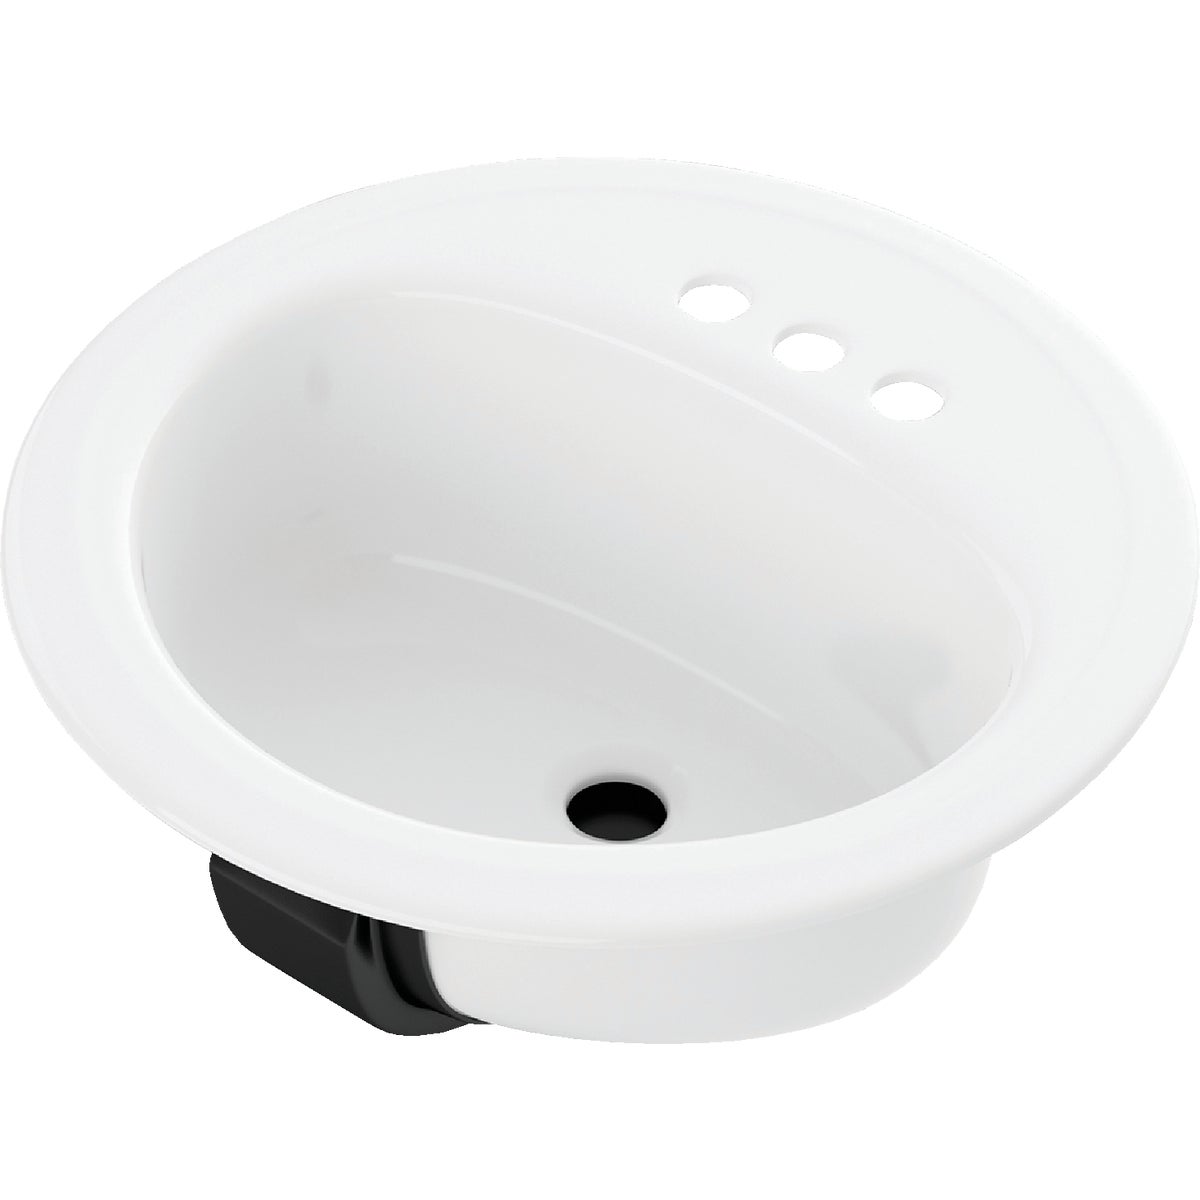 Item 435407, The Azalea is a 20 x 17 x 6 1/2 oval self-rimming porcelain enamel lavatory